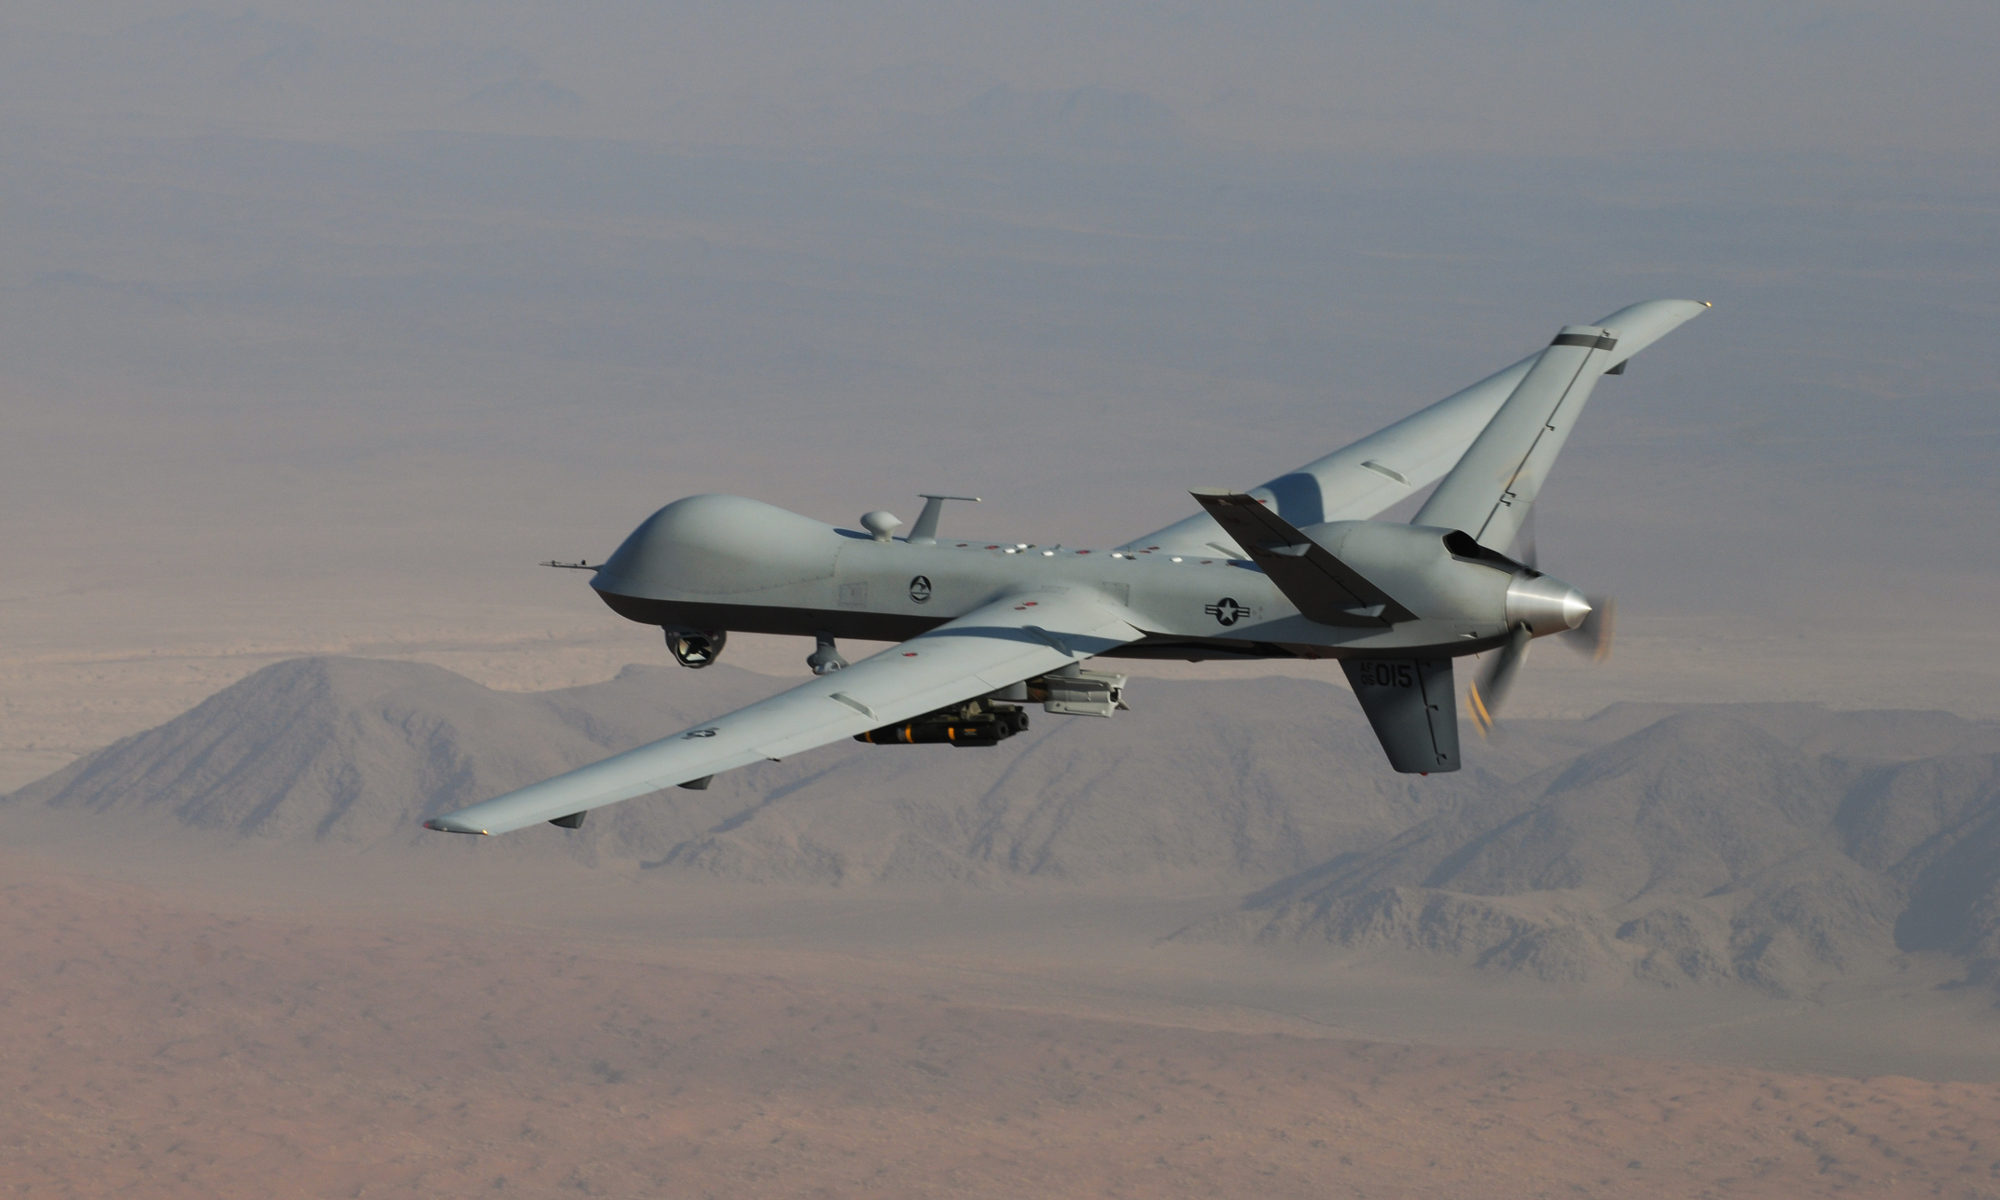 MQ-Q Reaper unmanned aircraft in flight over desert